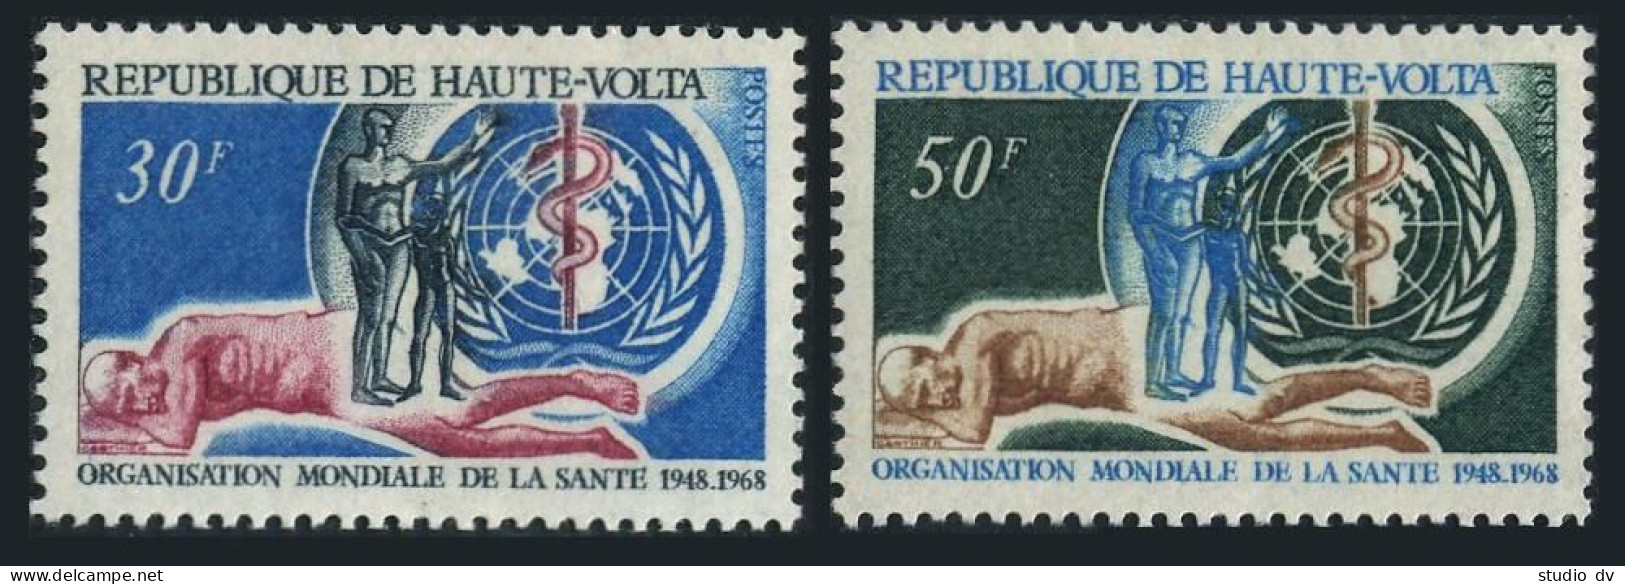 Burkina Faso 188-189.MNH.Michel 238-239. WHO-20,1968.Emblem,sick People.1968. - Burkina Faso (1984-...)